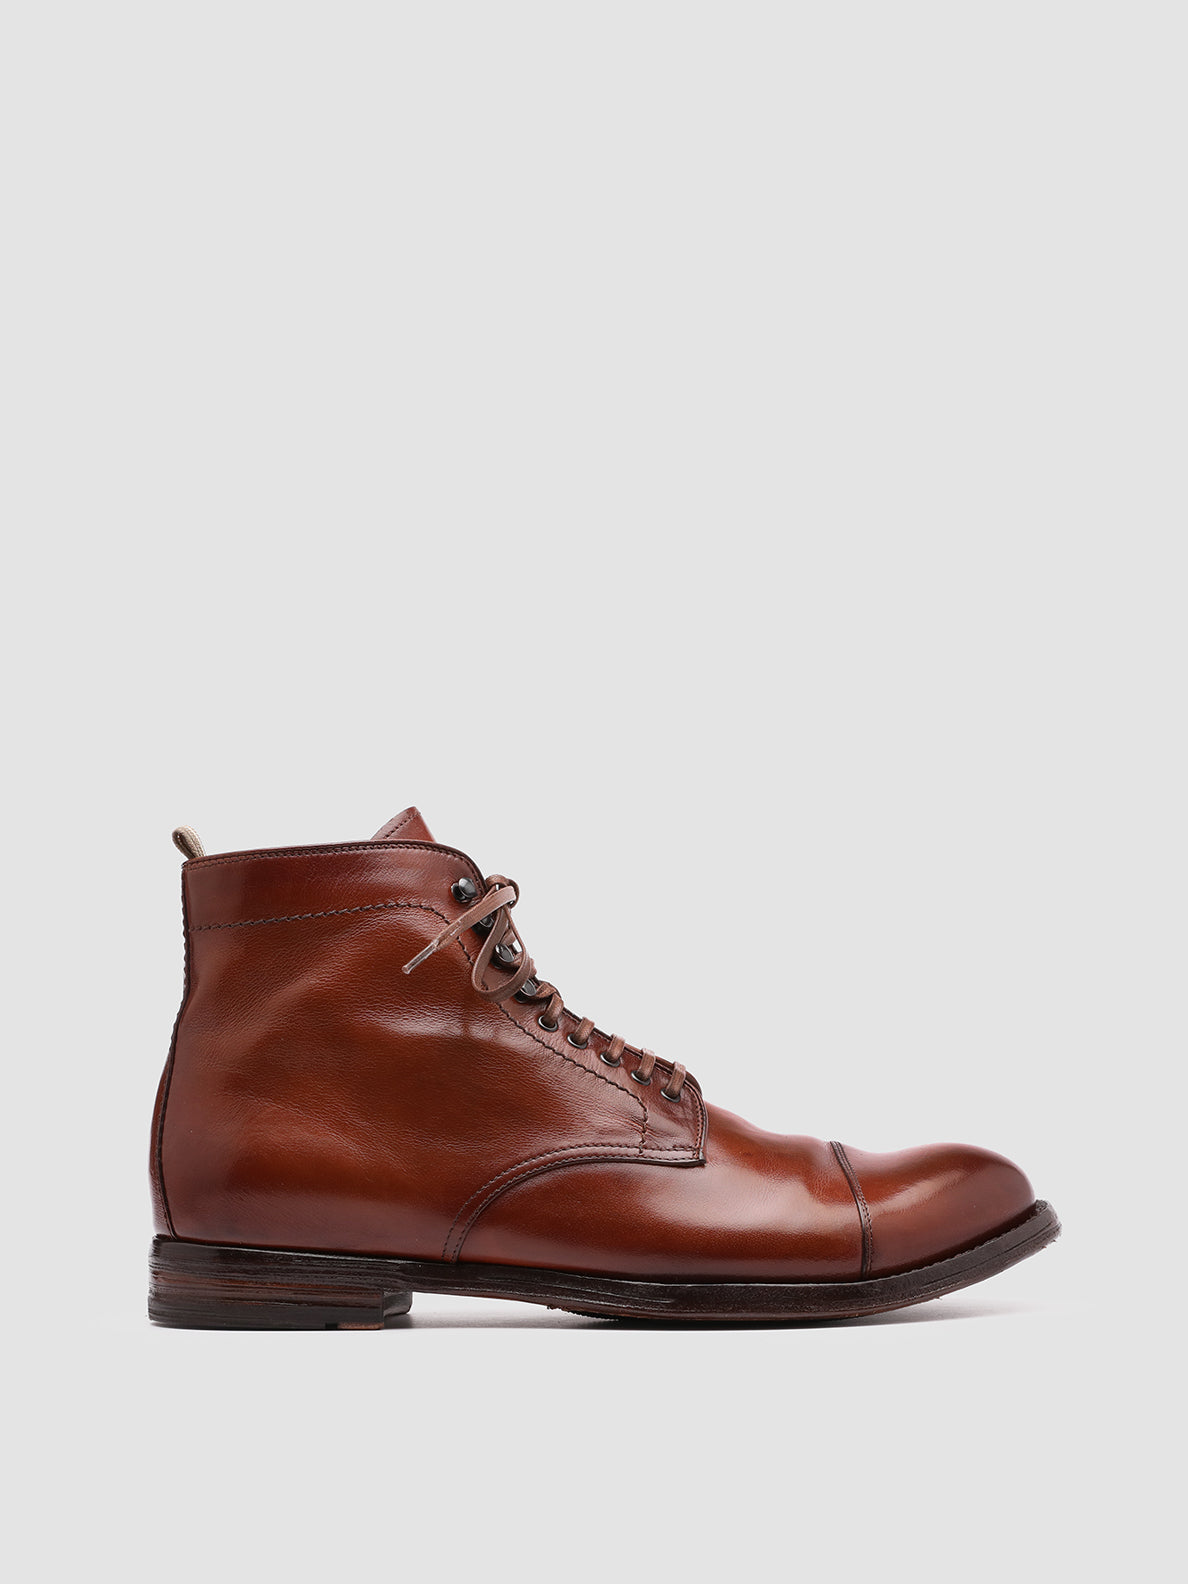 Men's Leather Boots ANATOMIA 016 – Officine Creative EU